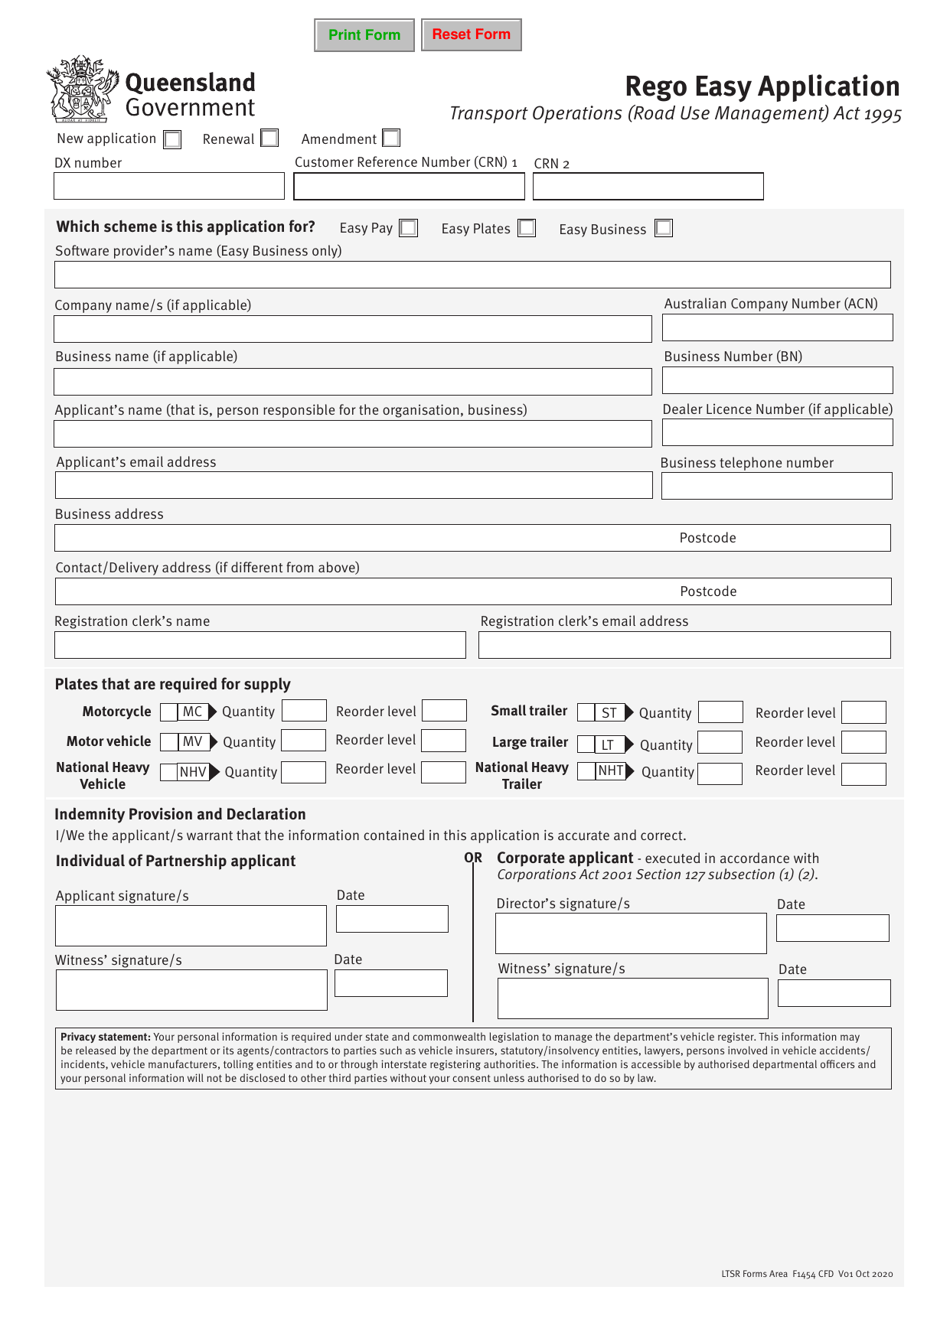 Form F1454 Rego Easy Application - Queensland, Australia, Page 1